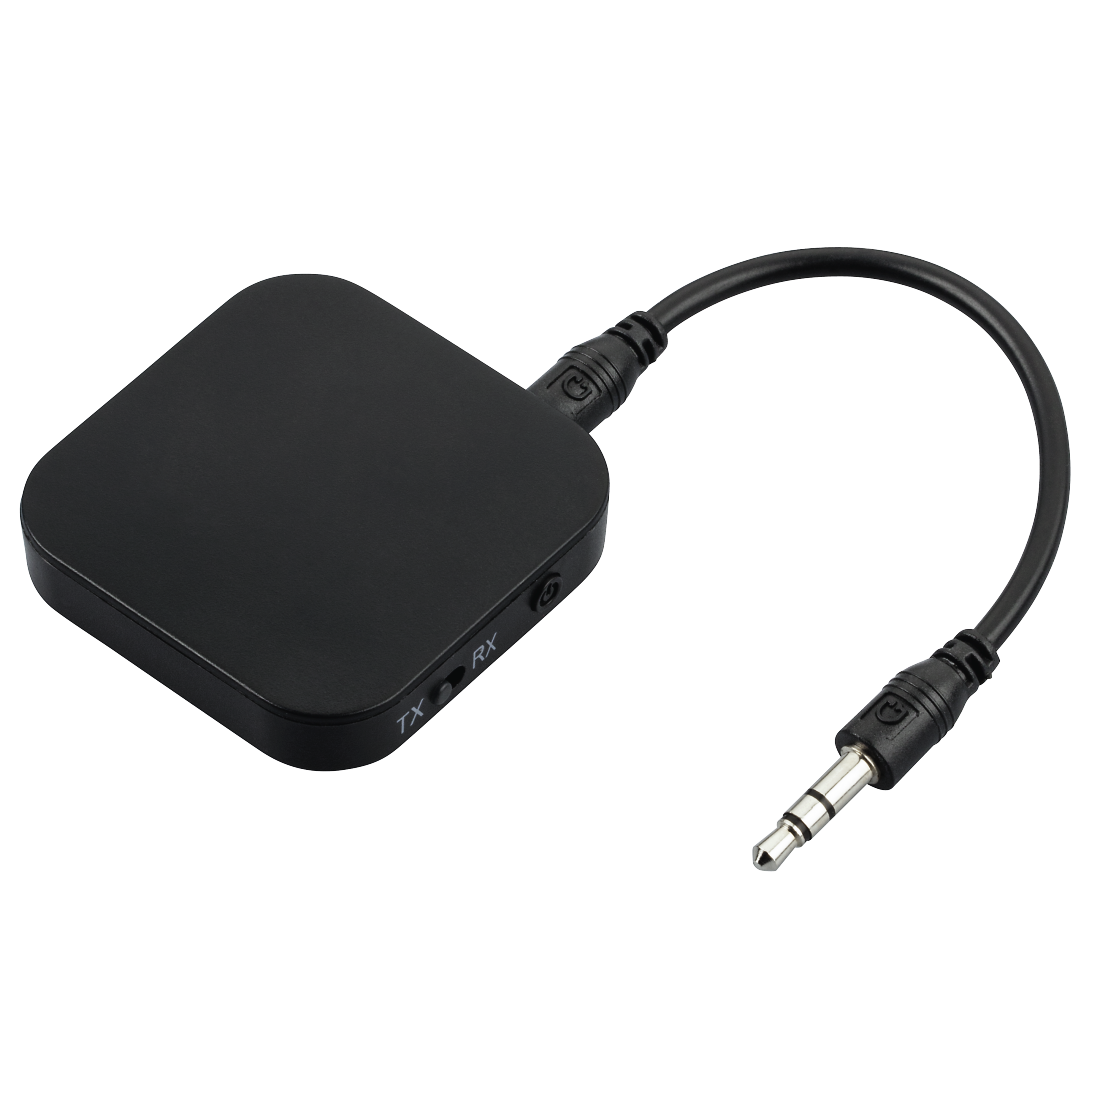 00137473 Hama Bluetooth® Audio Transmitter/Receiver, 2in1 Adapter, black